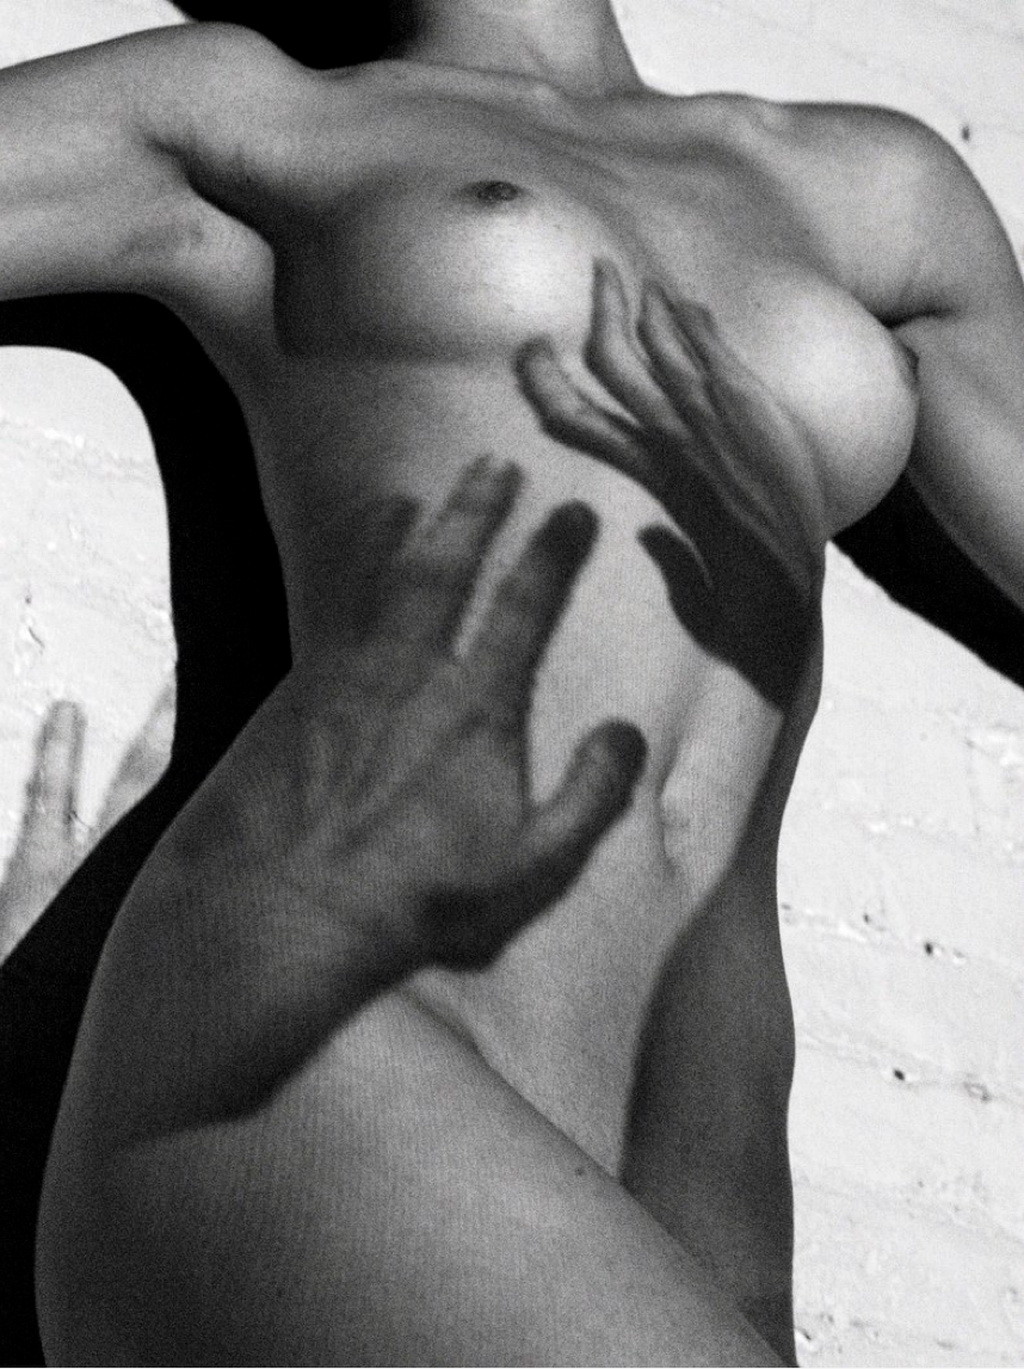 Monika jagaciak entièrement nue dans un photoshoot johan lindeberg 2015
 #75160686